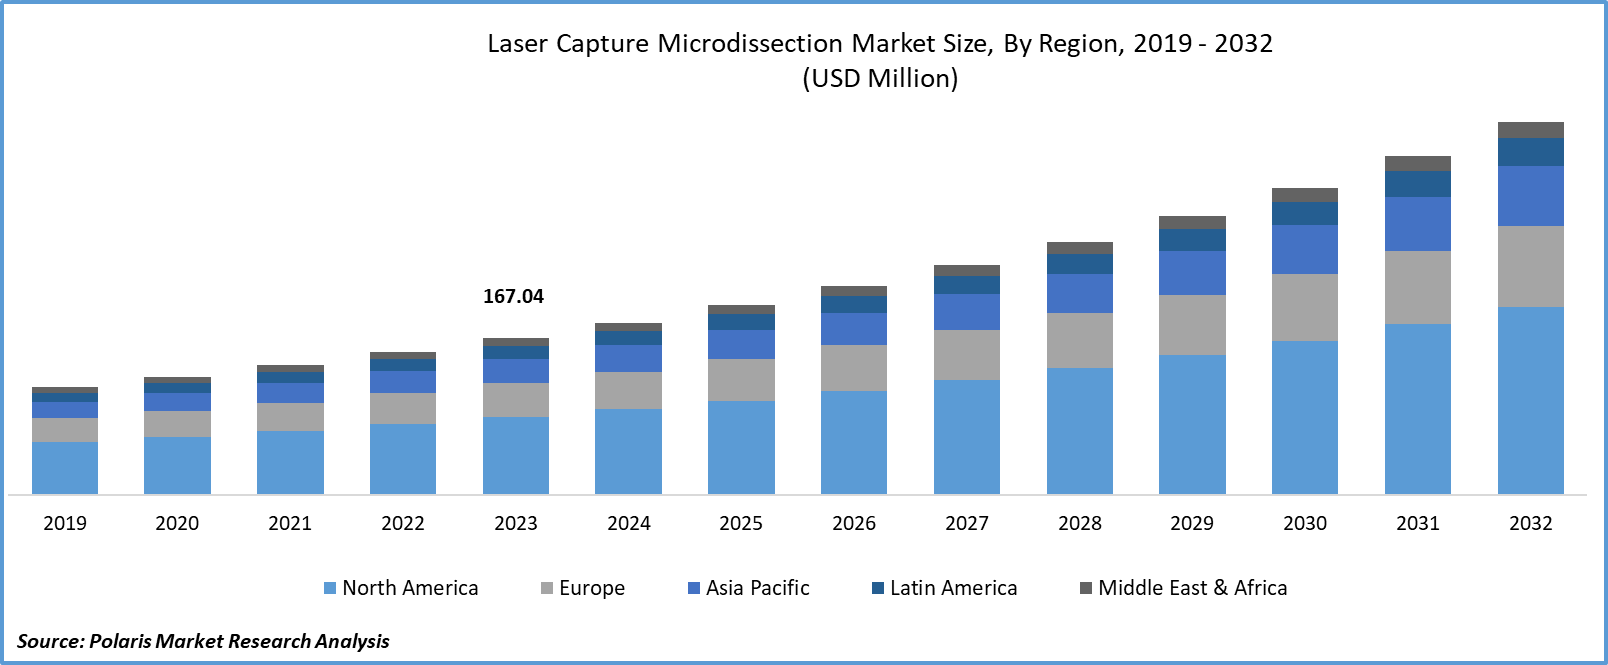 Laser Capture Microdissection Market Size